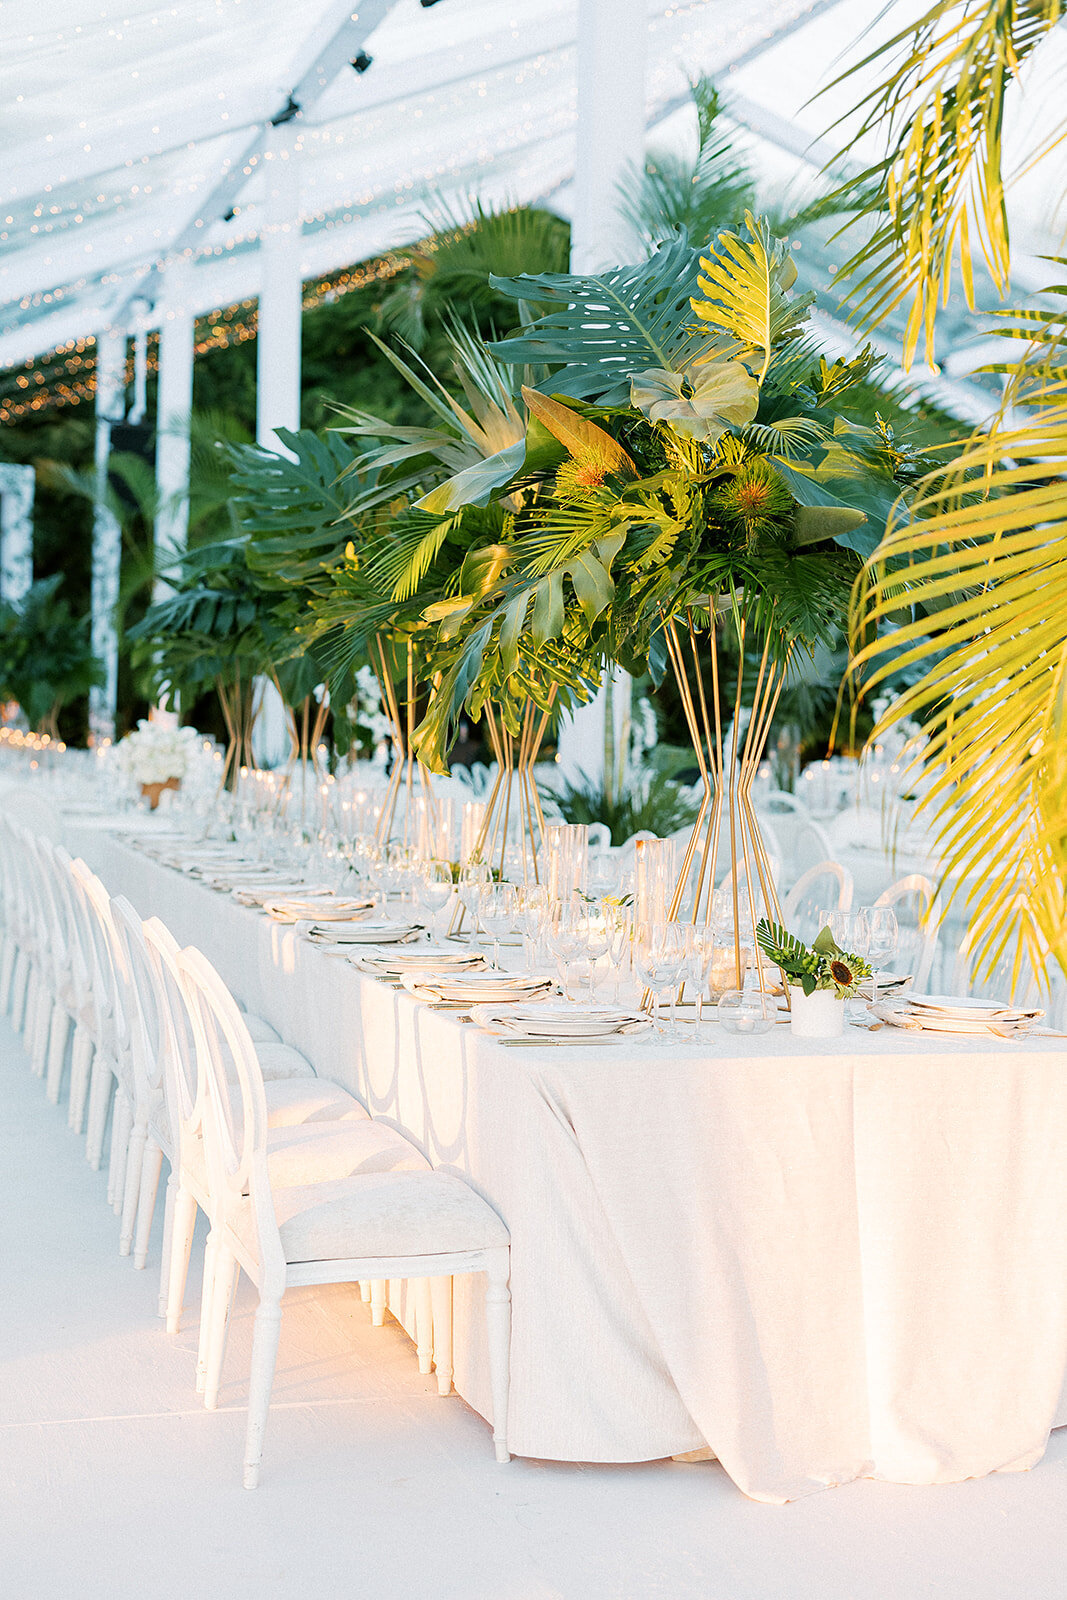 Tropical Luxury wedding in the beach